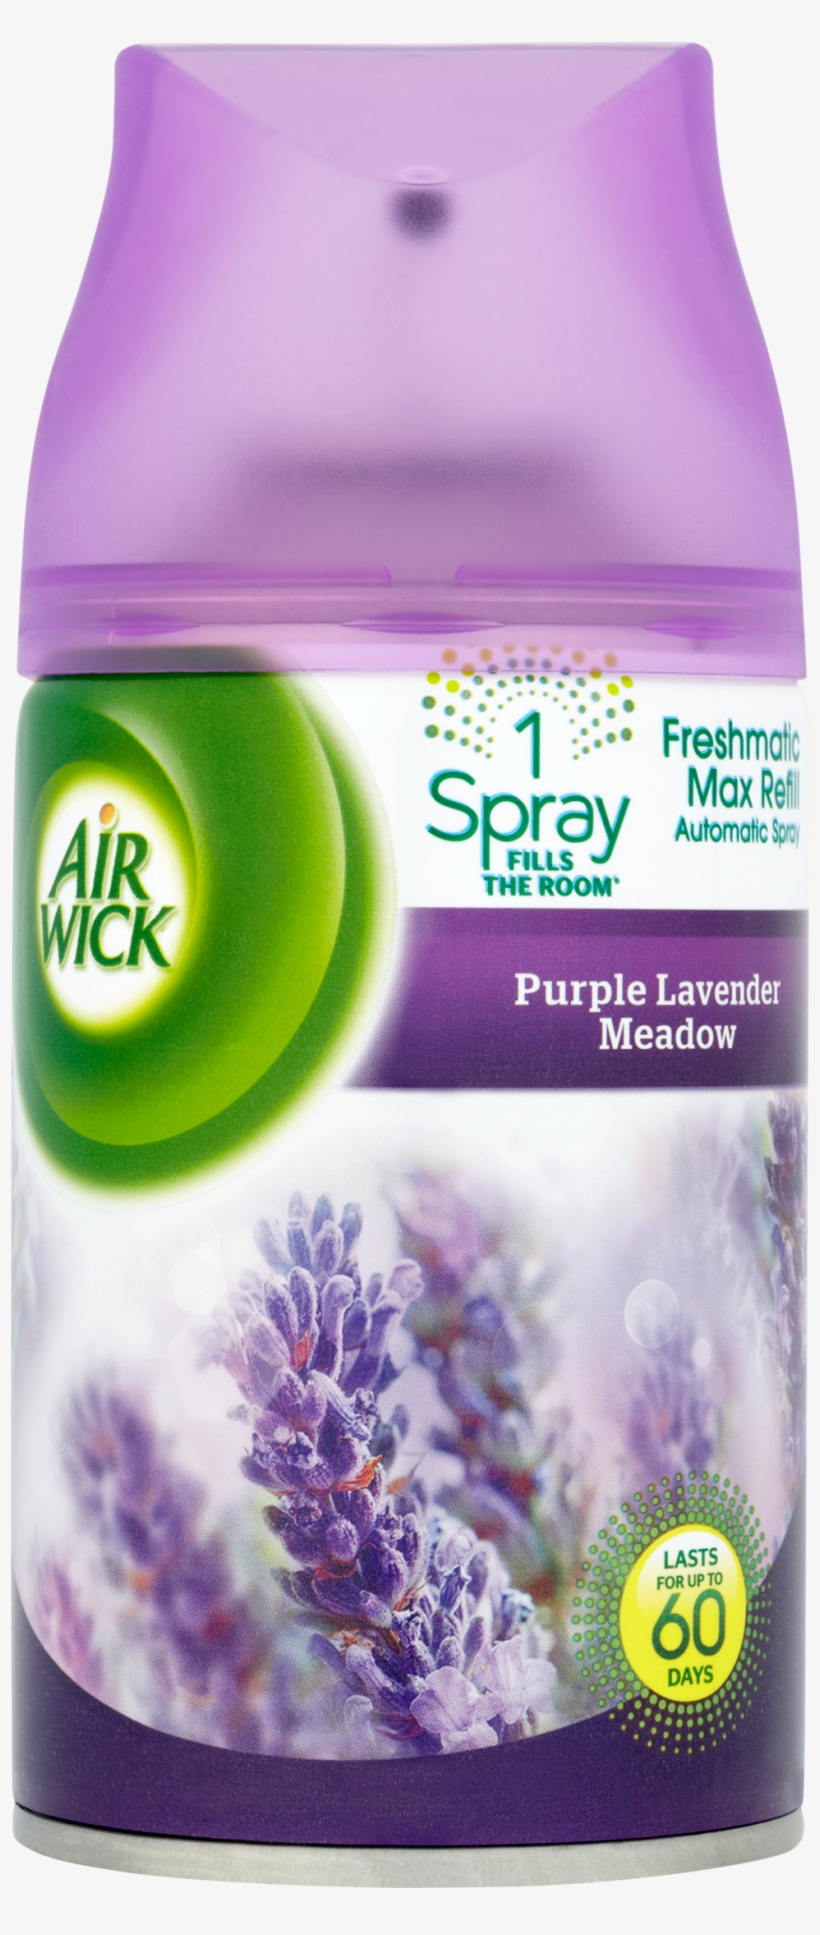 Air Wick Freshmatic Max Refill Purple Lavender Meadow - Air Wick Purple, transparent png #374893